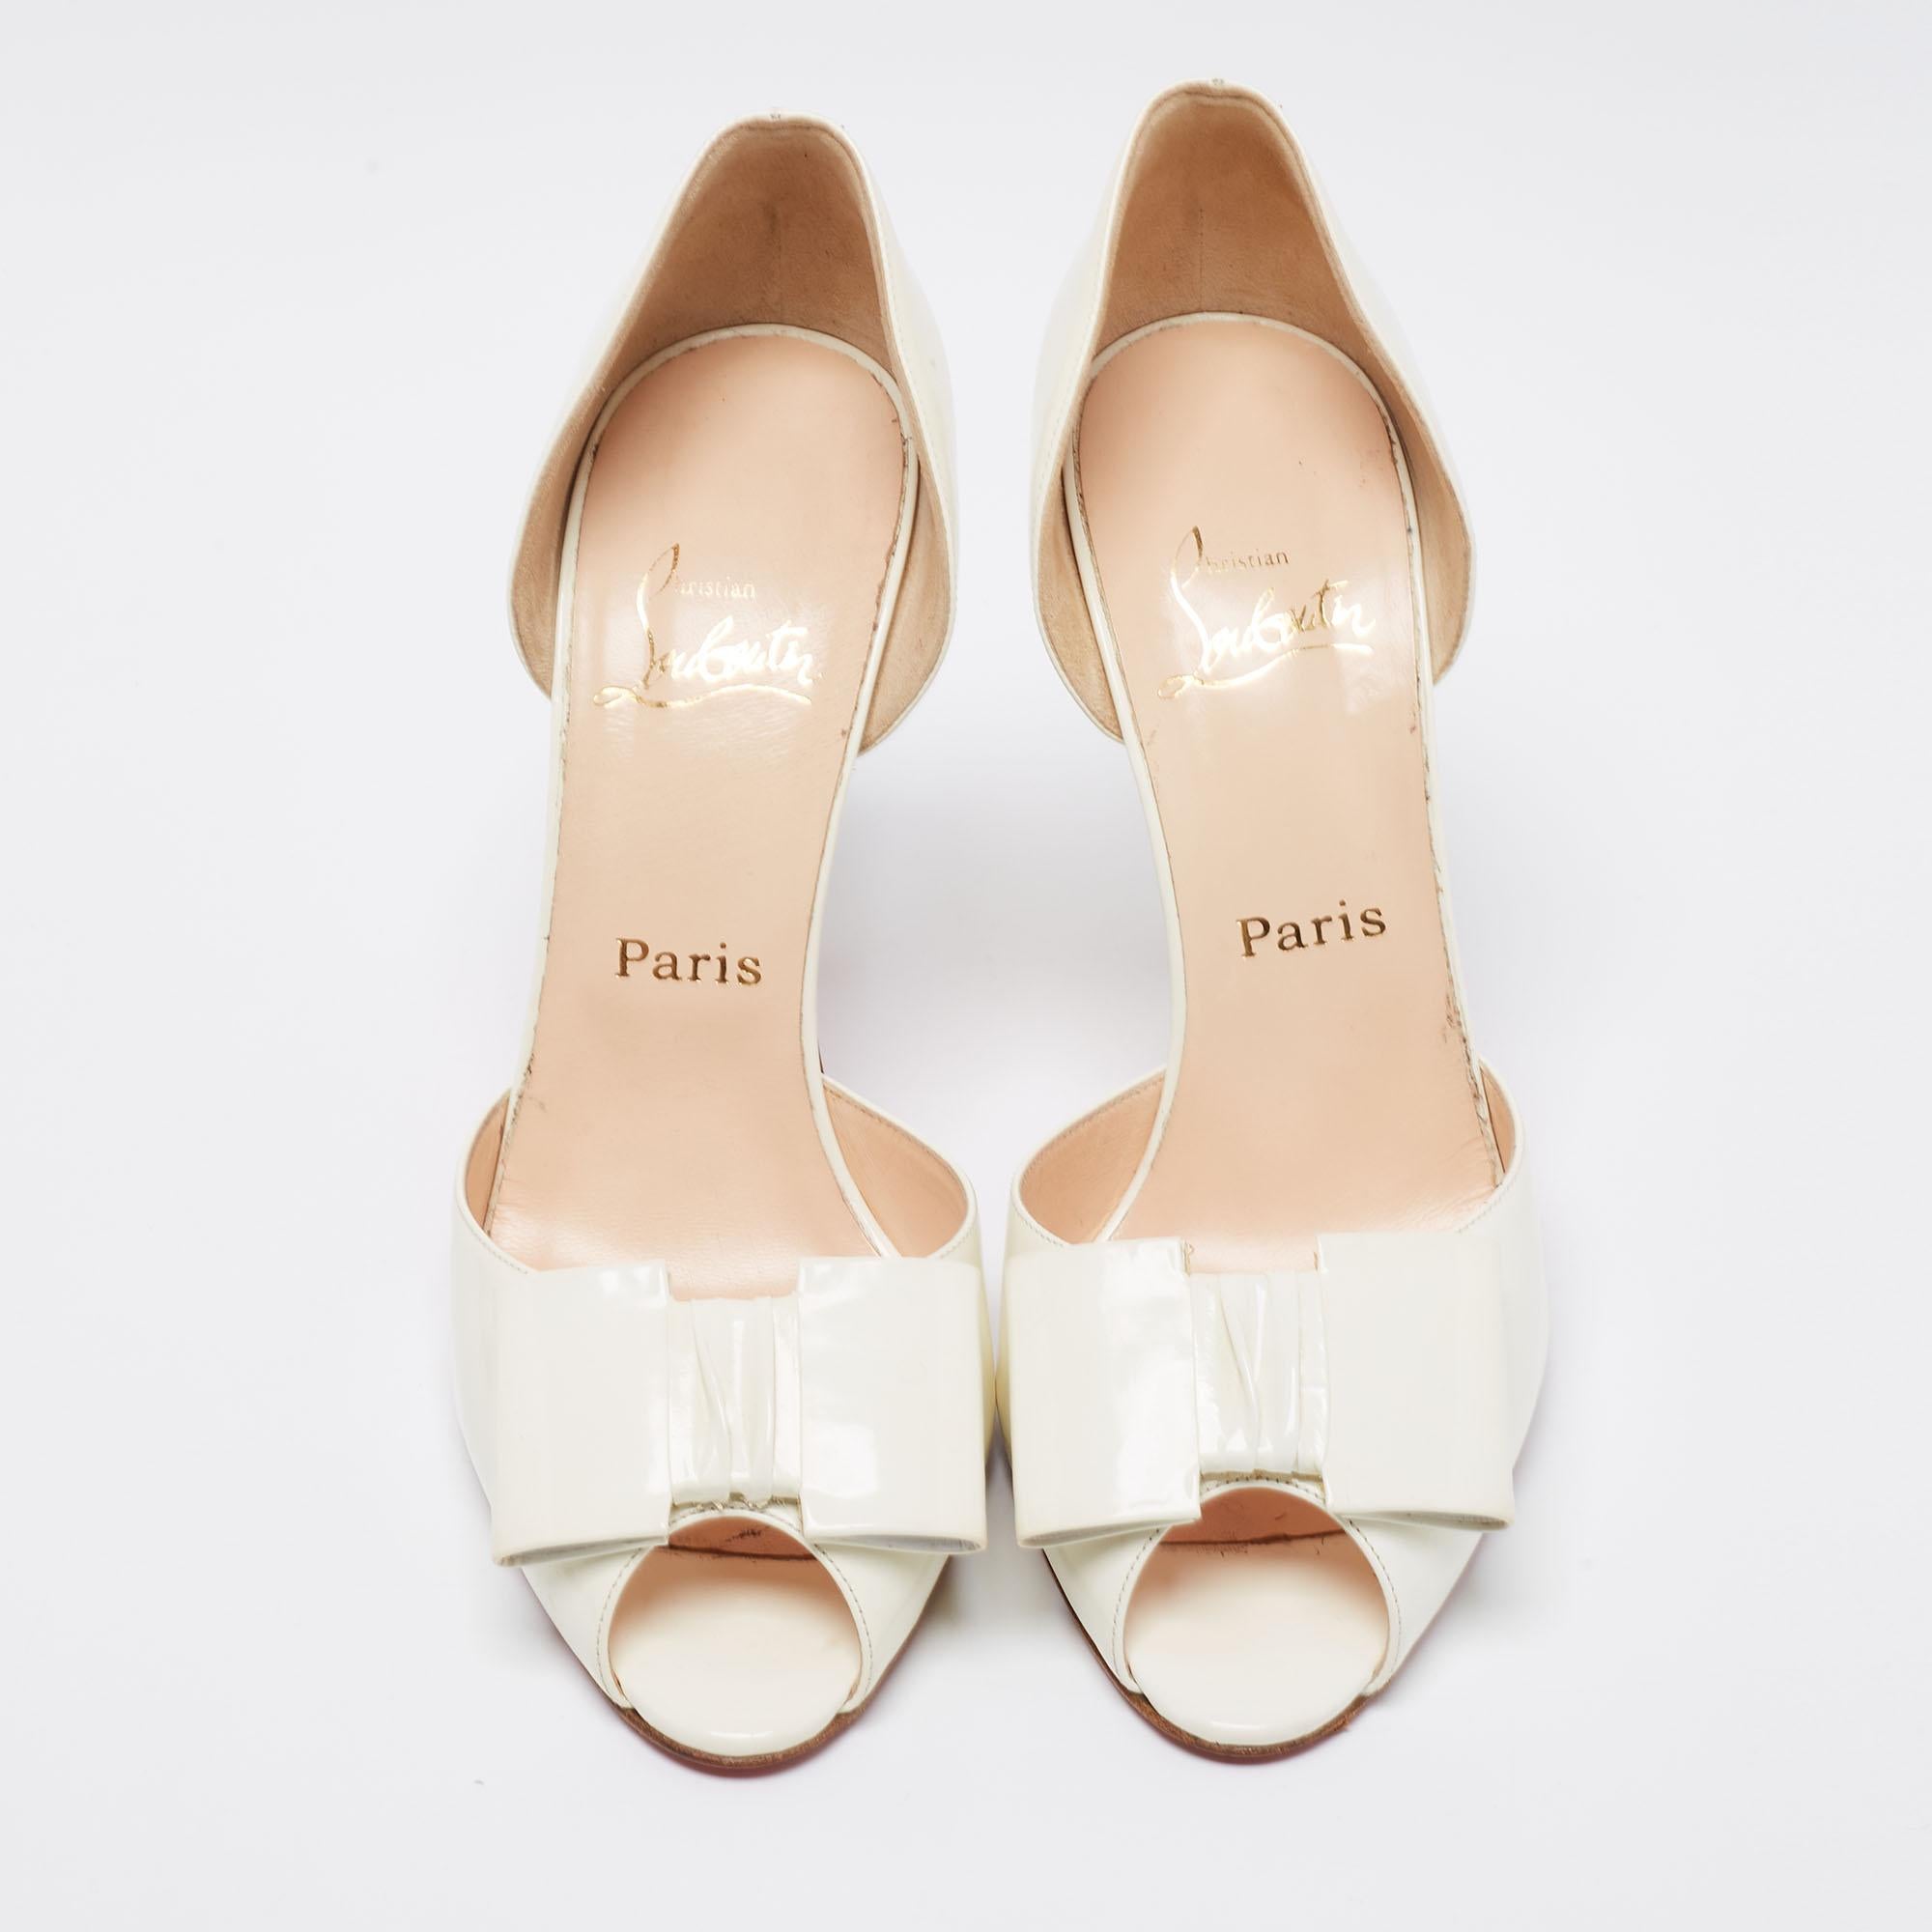 Women's Christian Louboutin Off-White Patent Leather Jolie-Noeud Peep-Toe Pumps Size 41